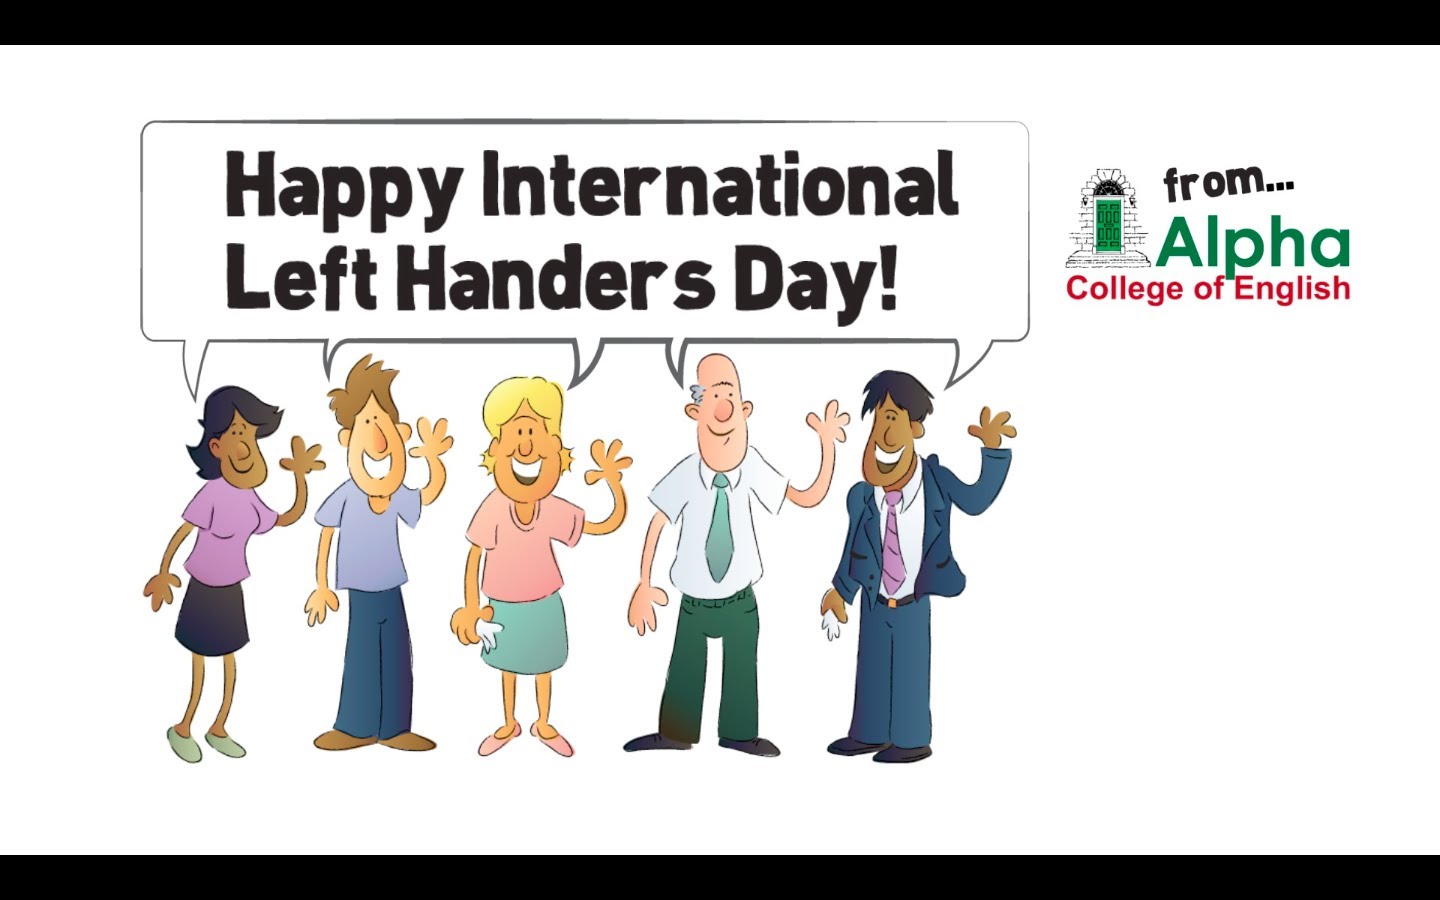 Int left. Left handers. Праздник lefthanders' Day.